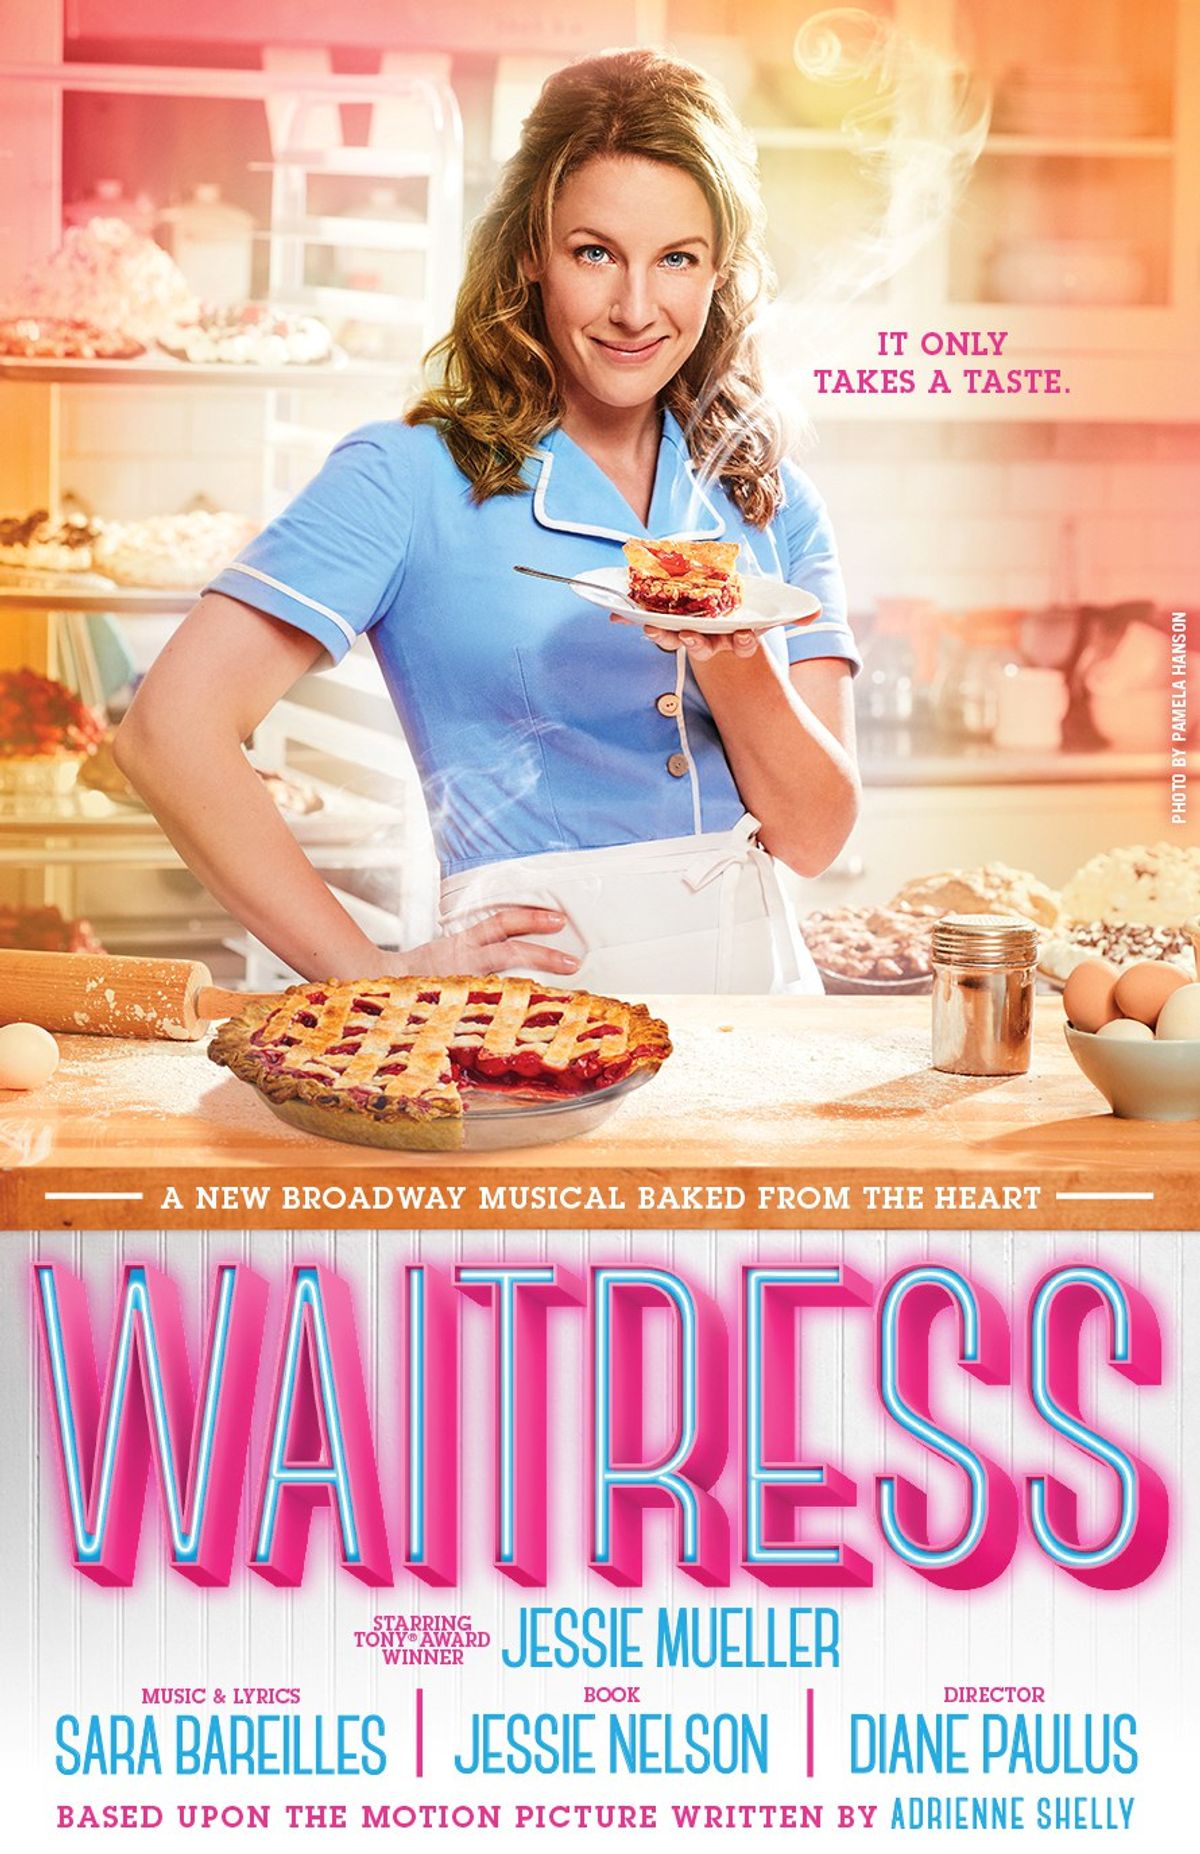 7 Reasons I Need To See "Waitress" The Musical